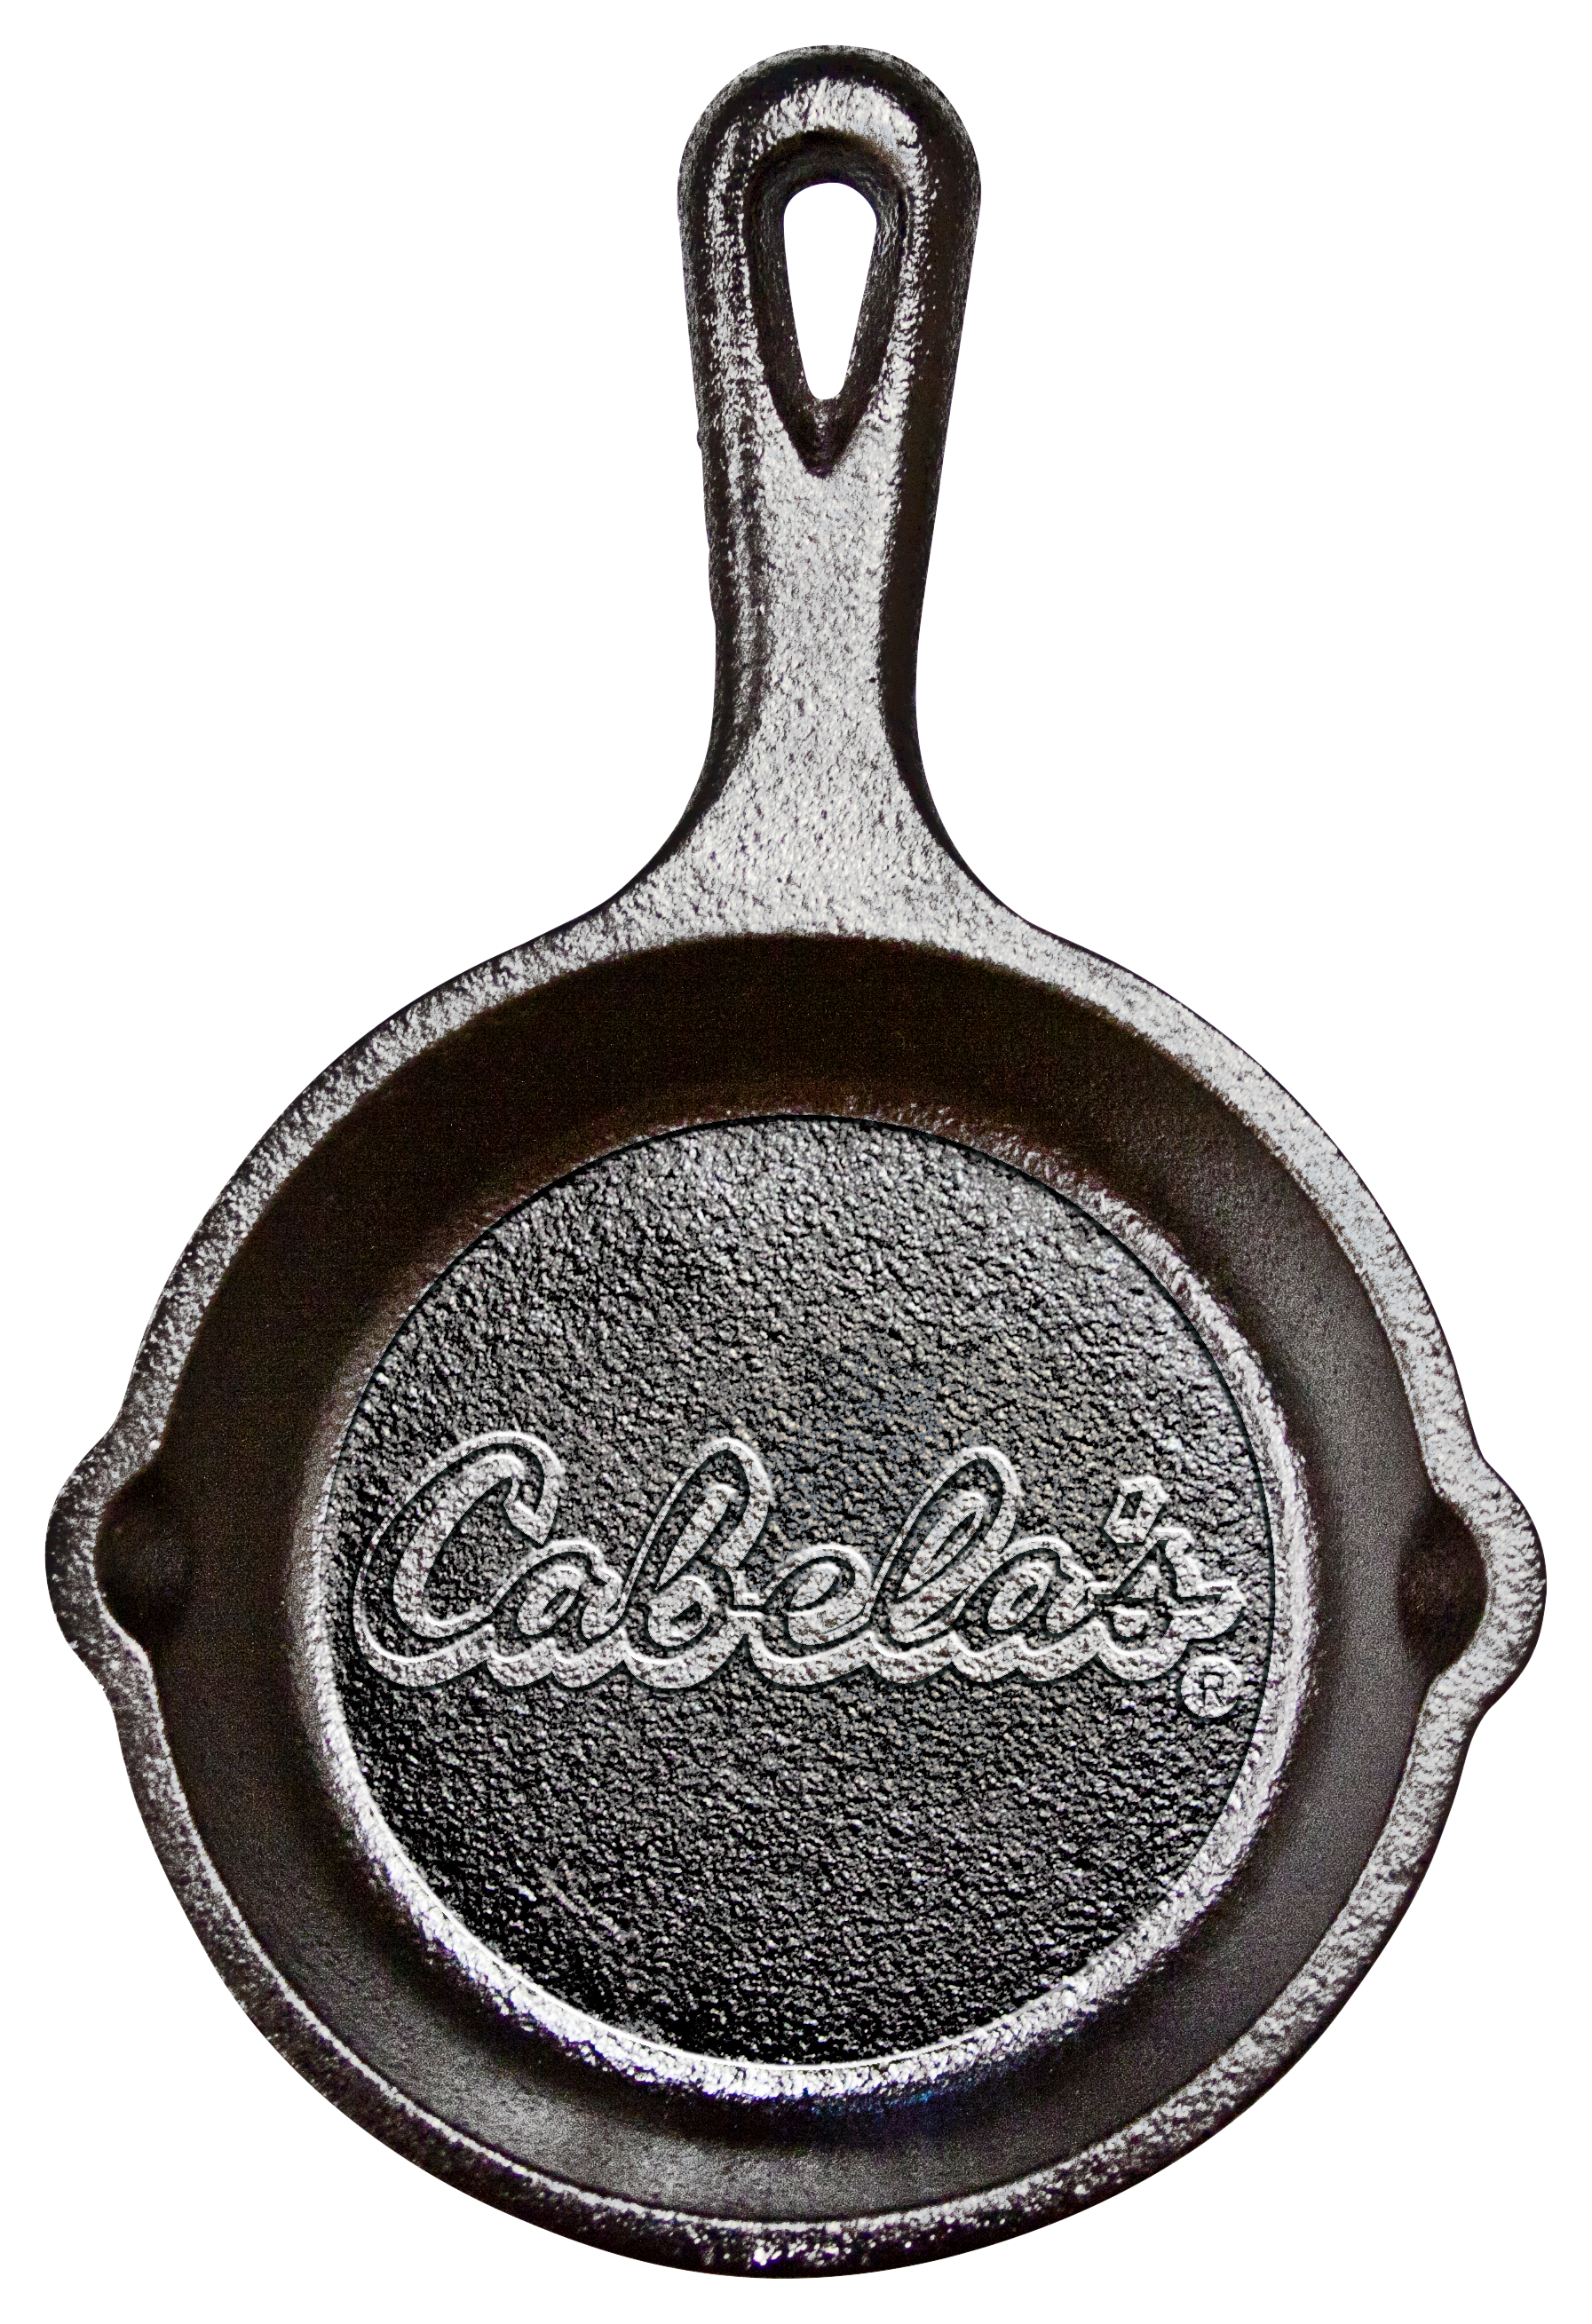 Lodge Cabela's Cast Iron Mini Skillet/Spoon Rest